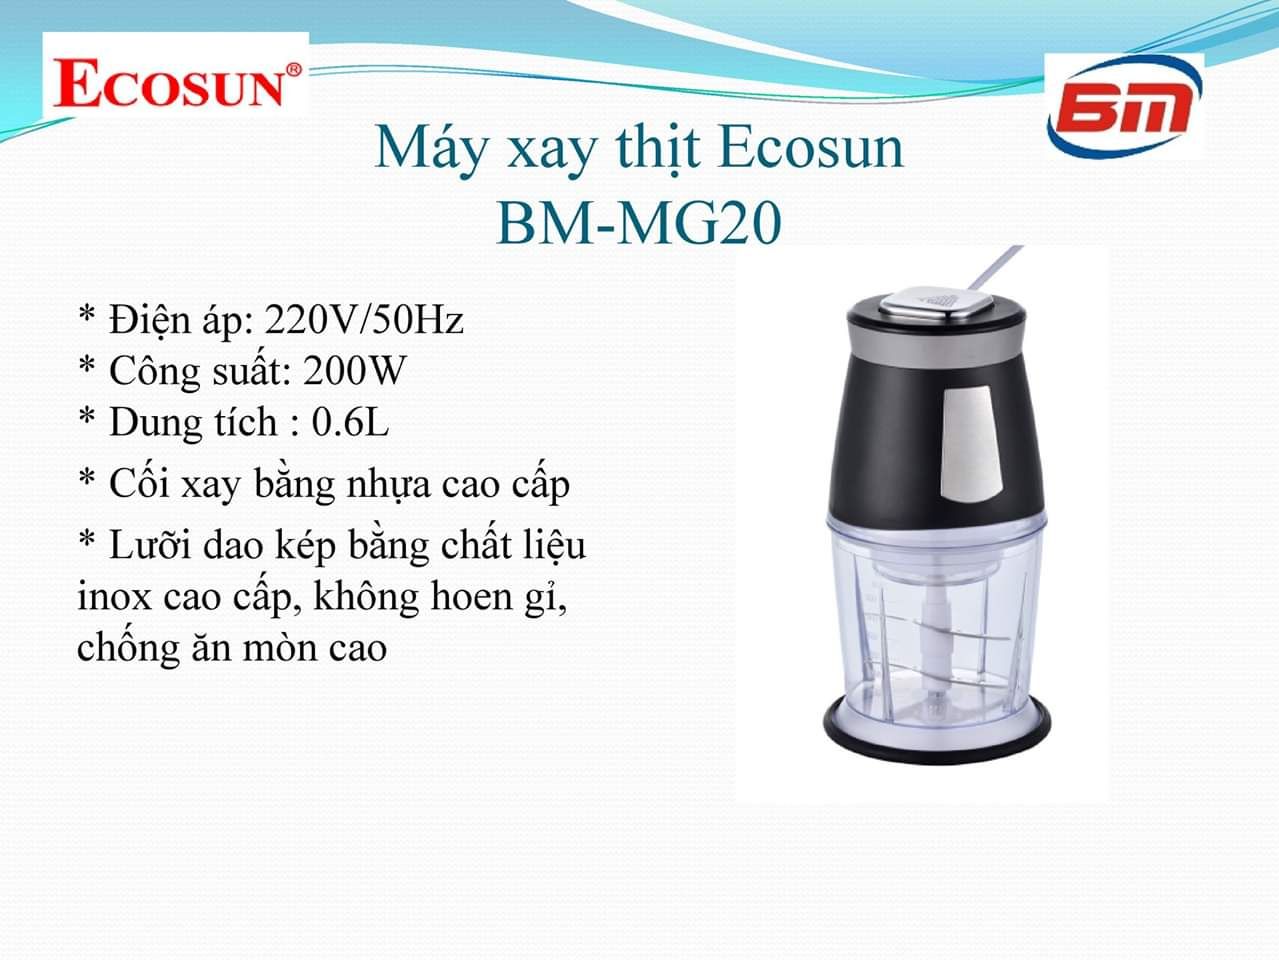 may xay thit ecosun bm mg20